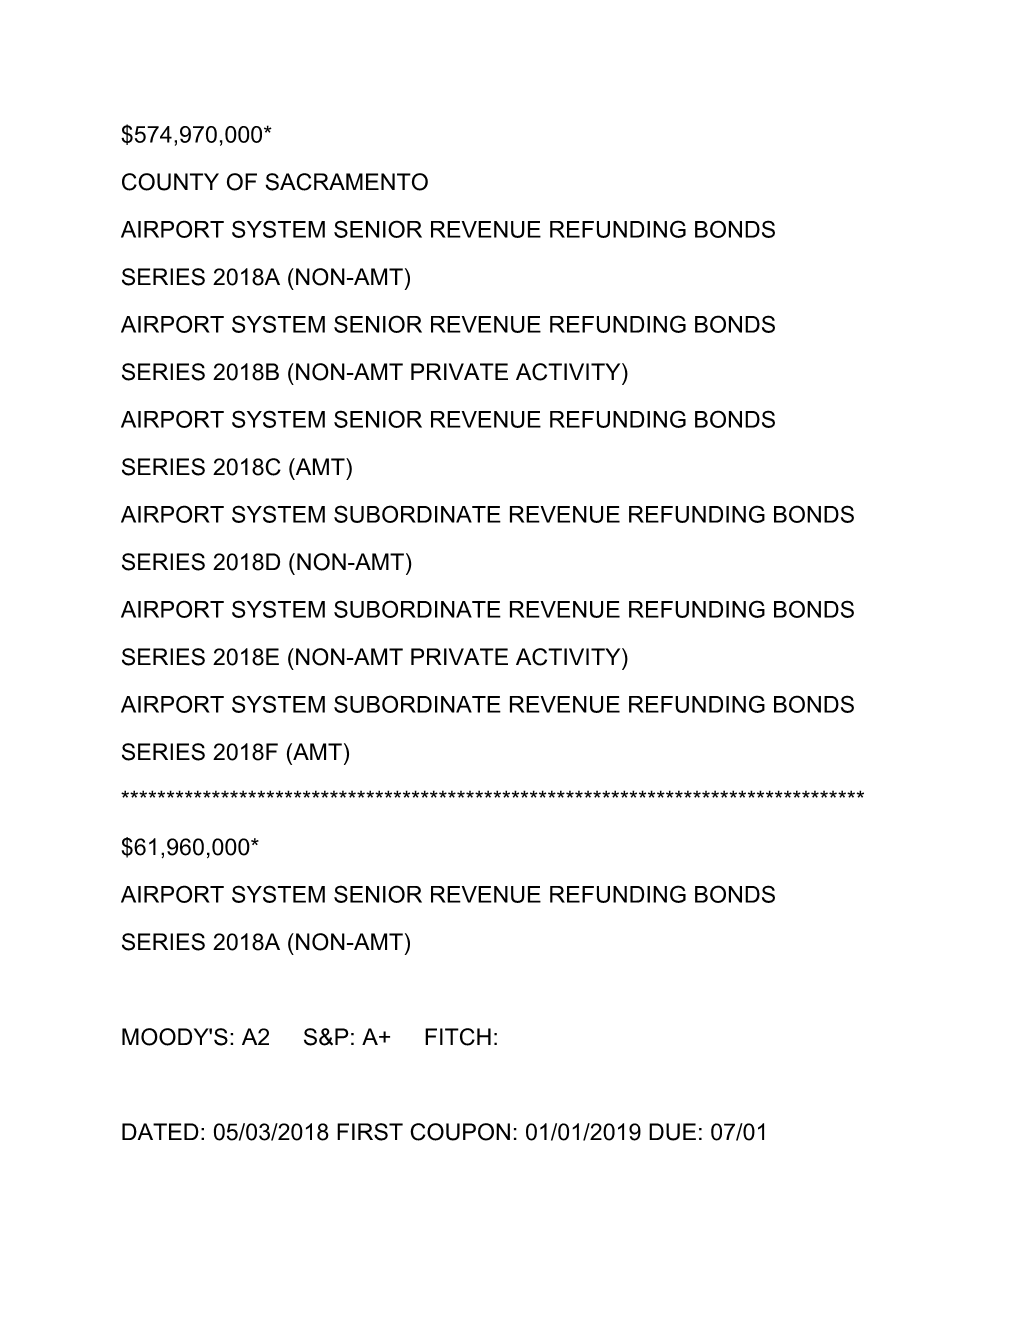 Airport System Senior Revenue Refunding Bonds